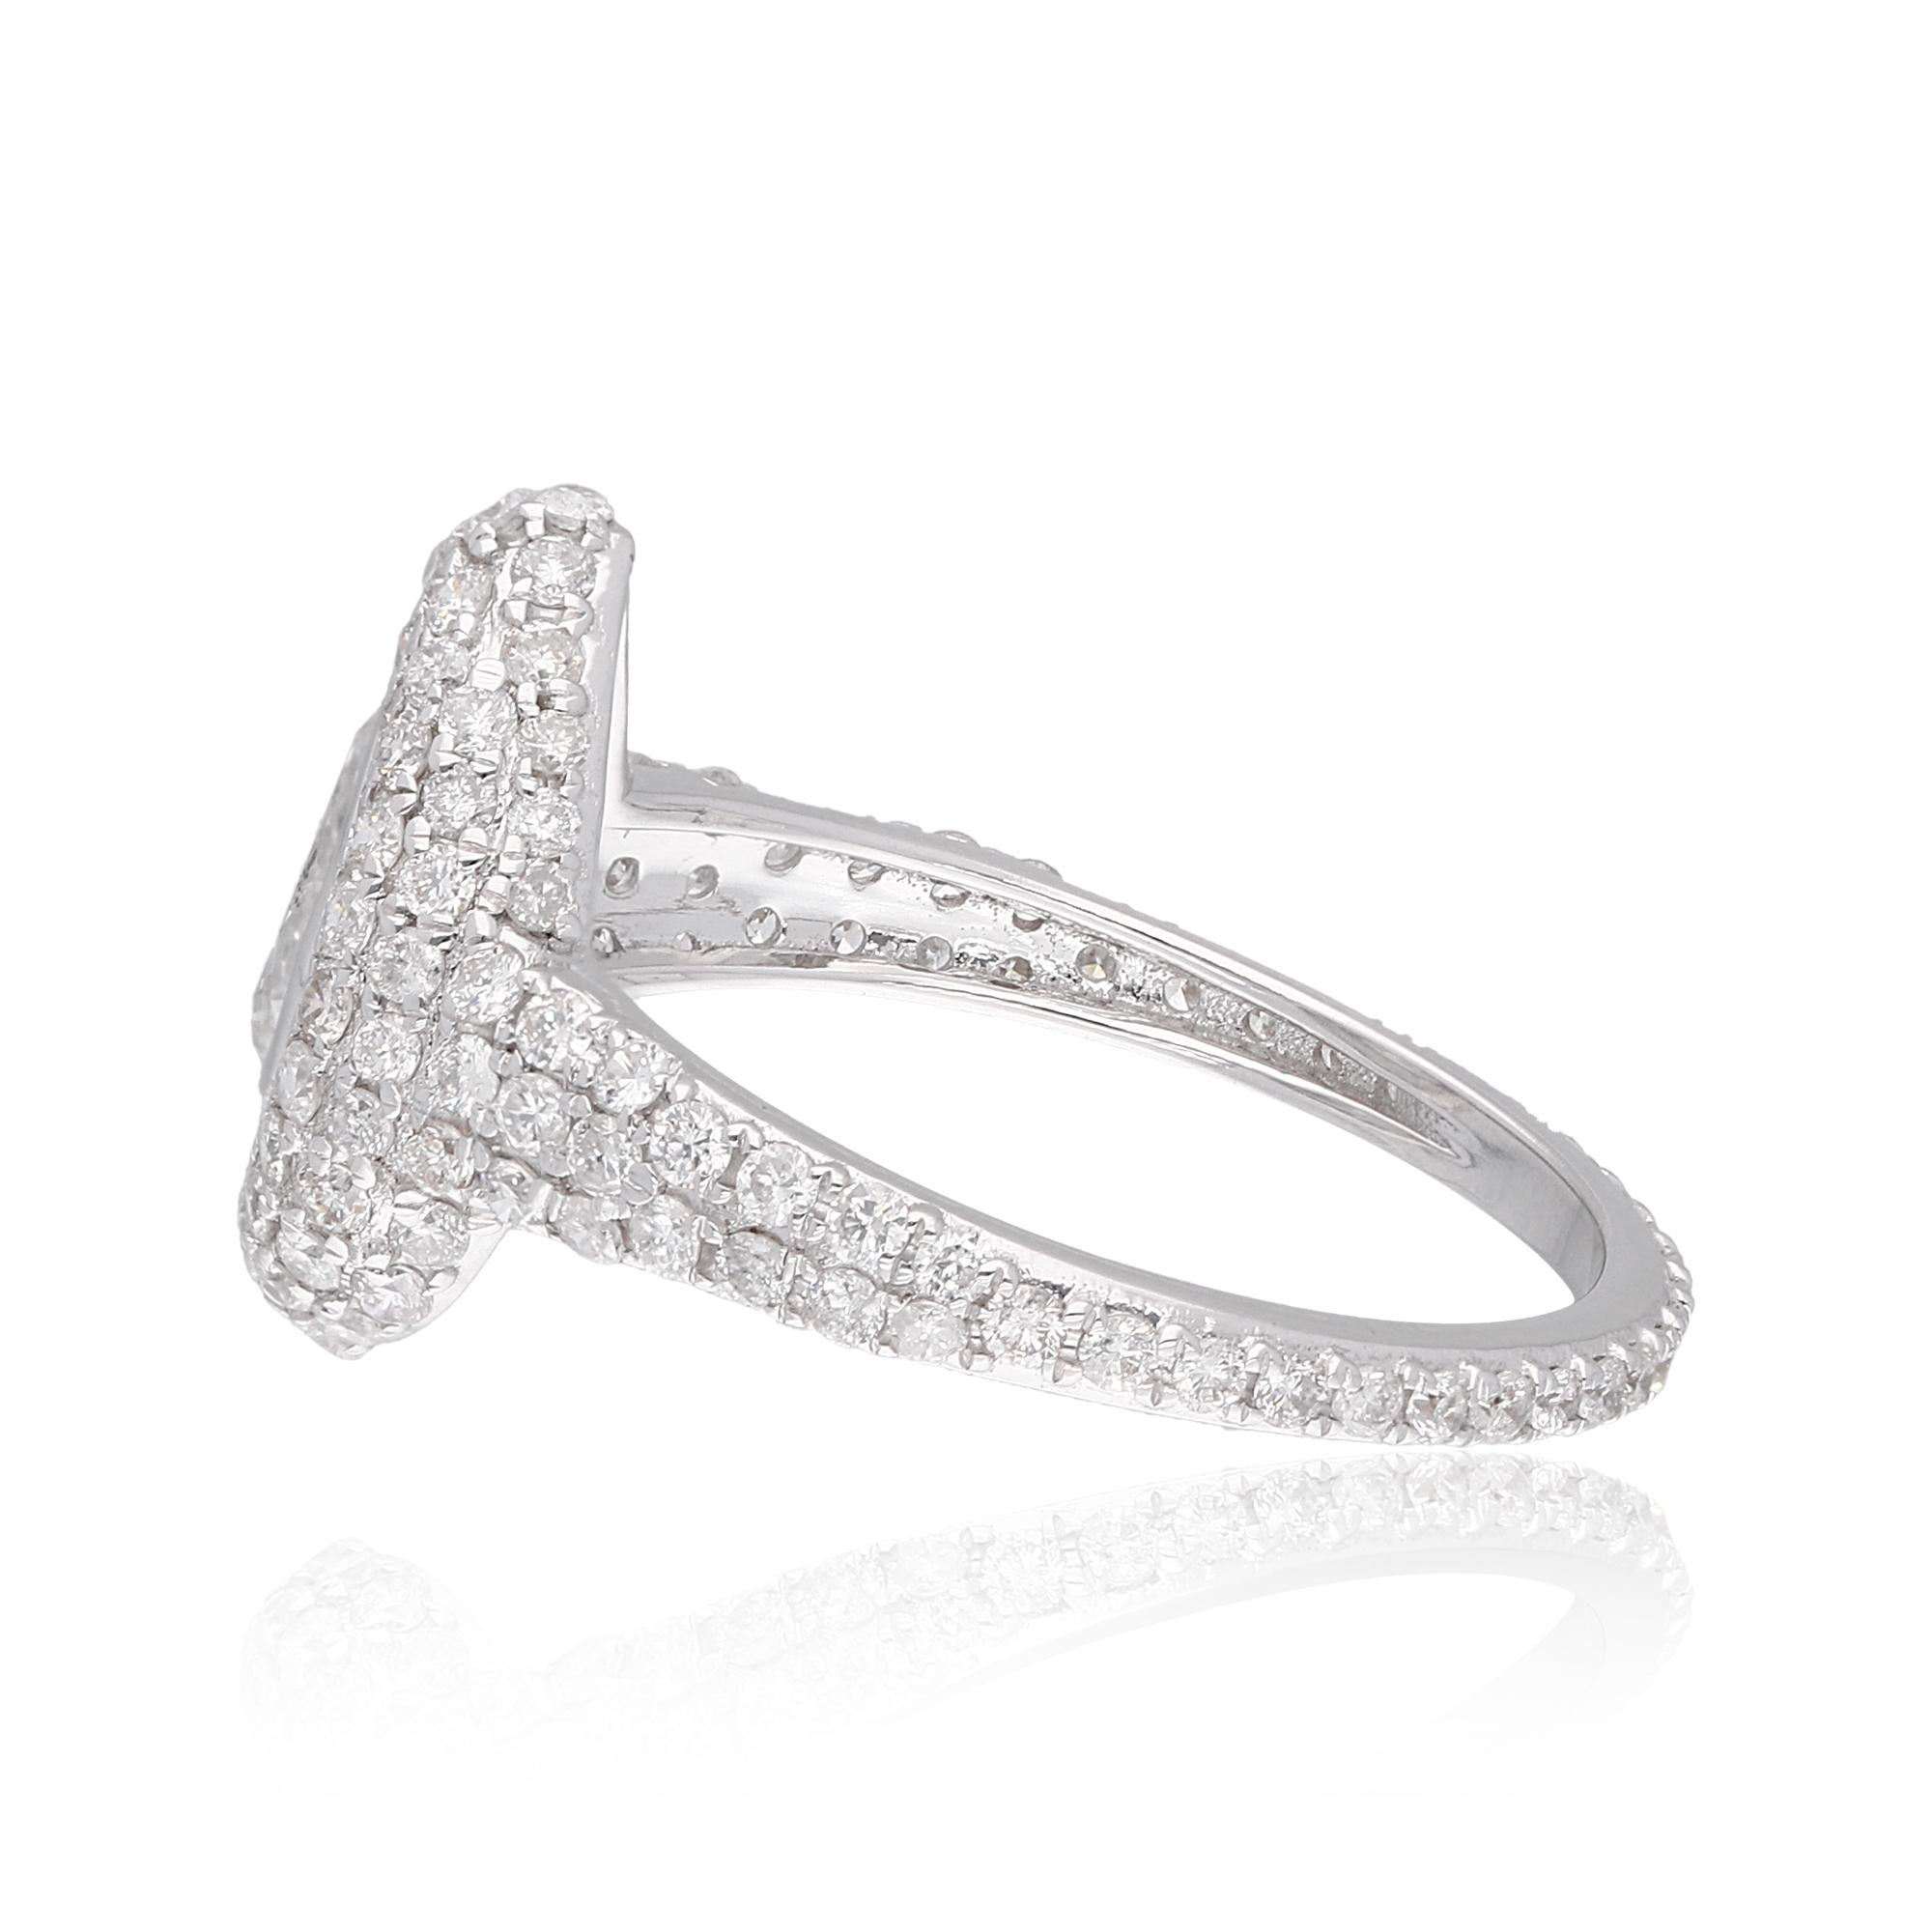 1.54 Carat Pear Diamond Studded Ring 18 Karat White Gold Handmade Fine Jewelry For Sale 1